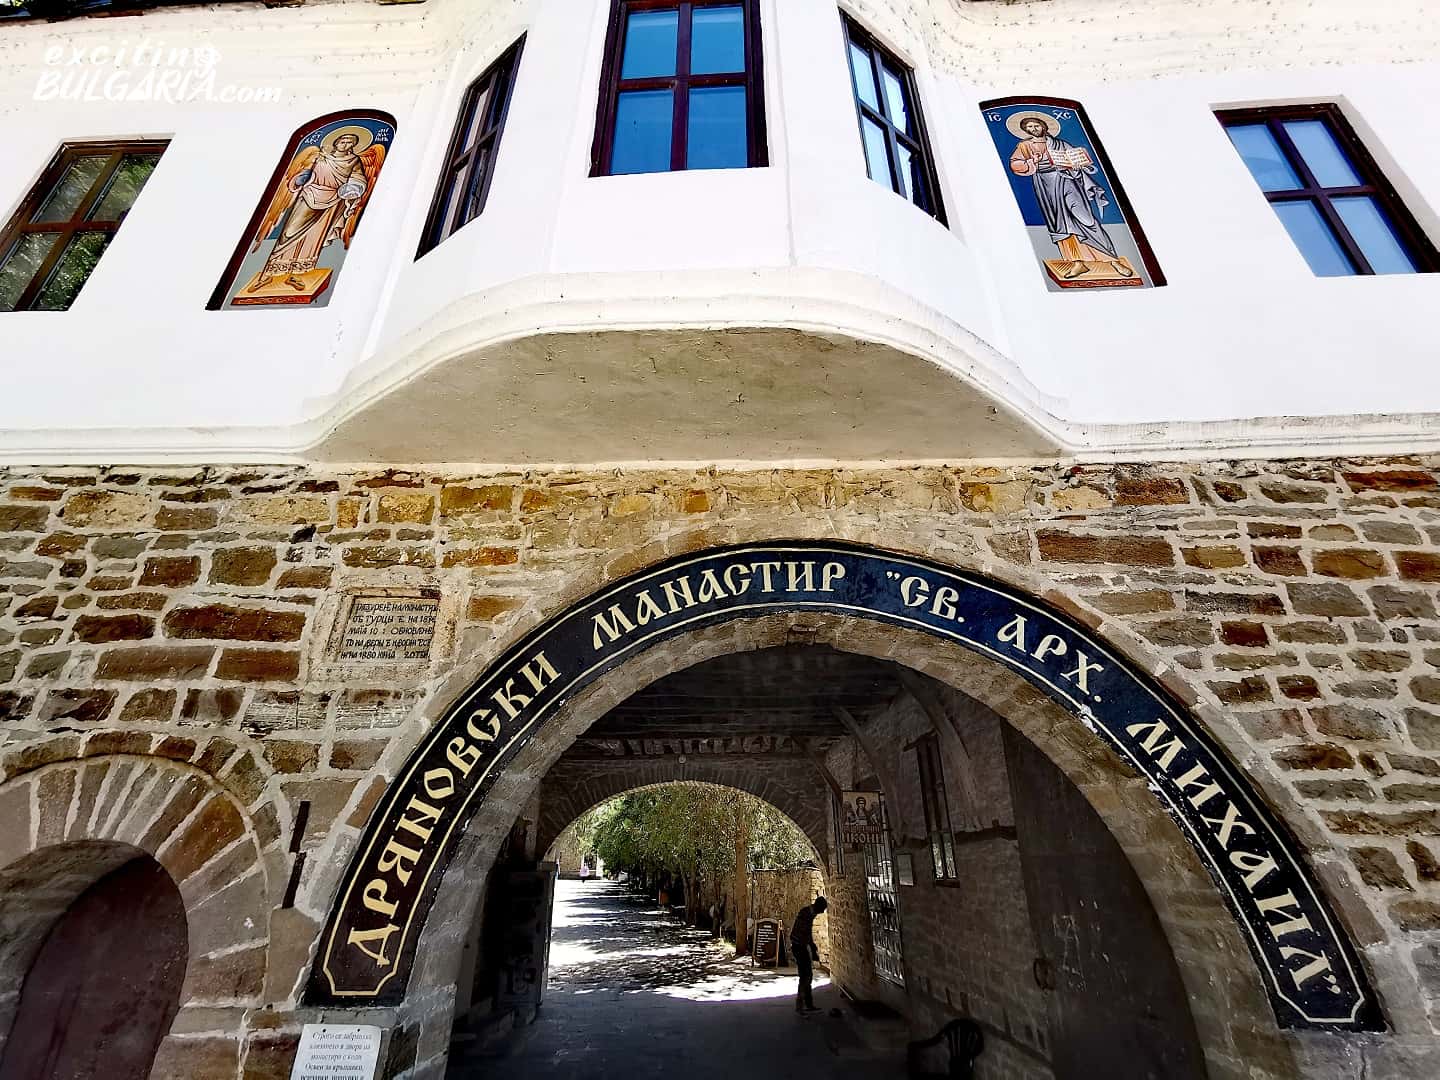 The entrance of the Dryanovo Monastery